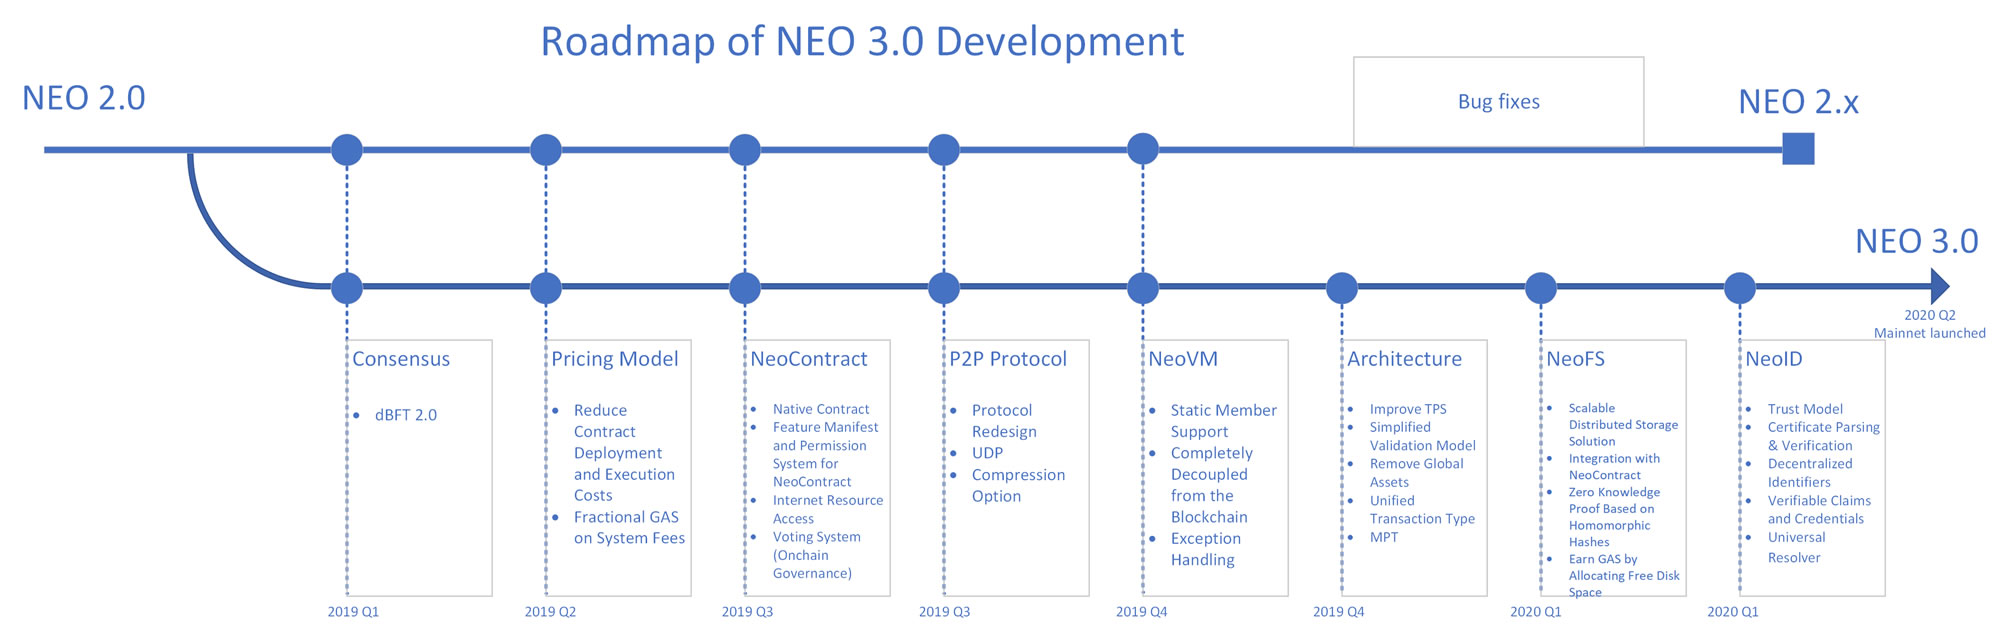 NEO 3.0 roadmap